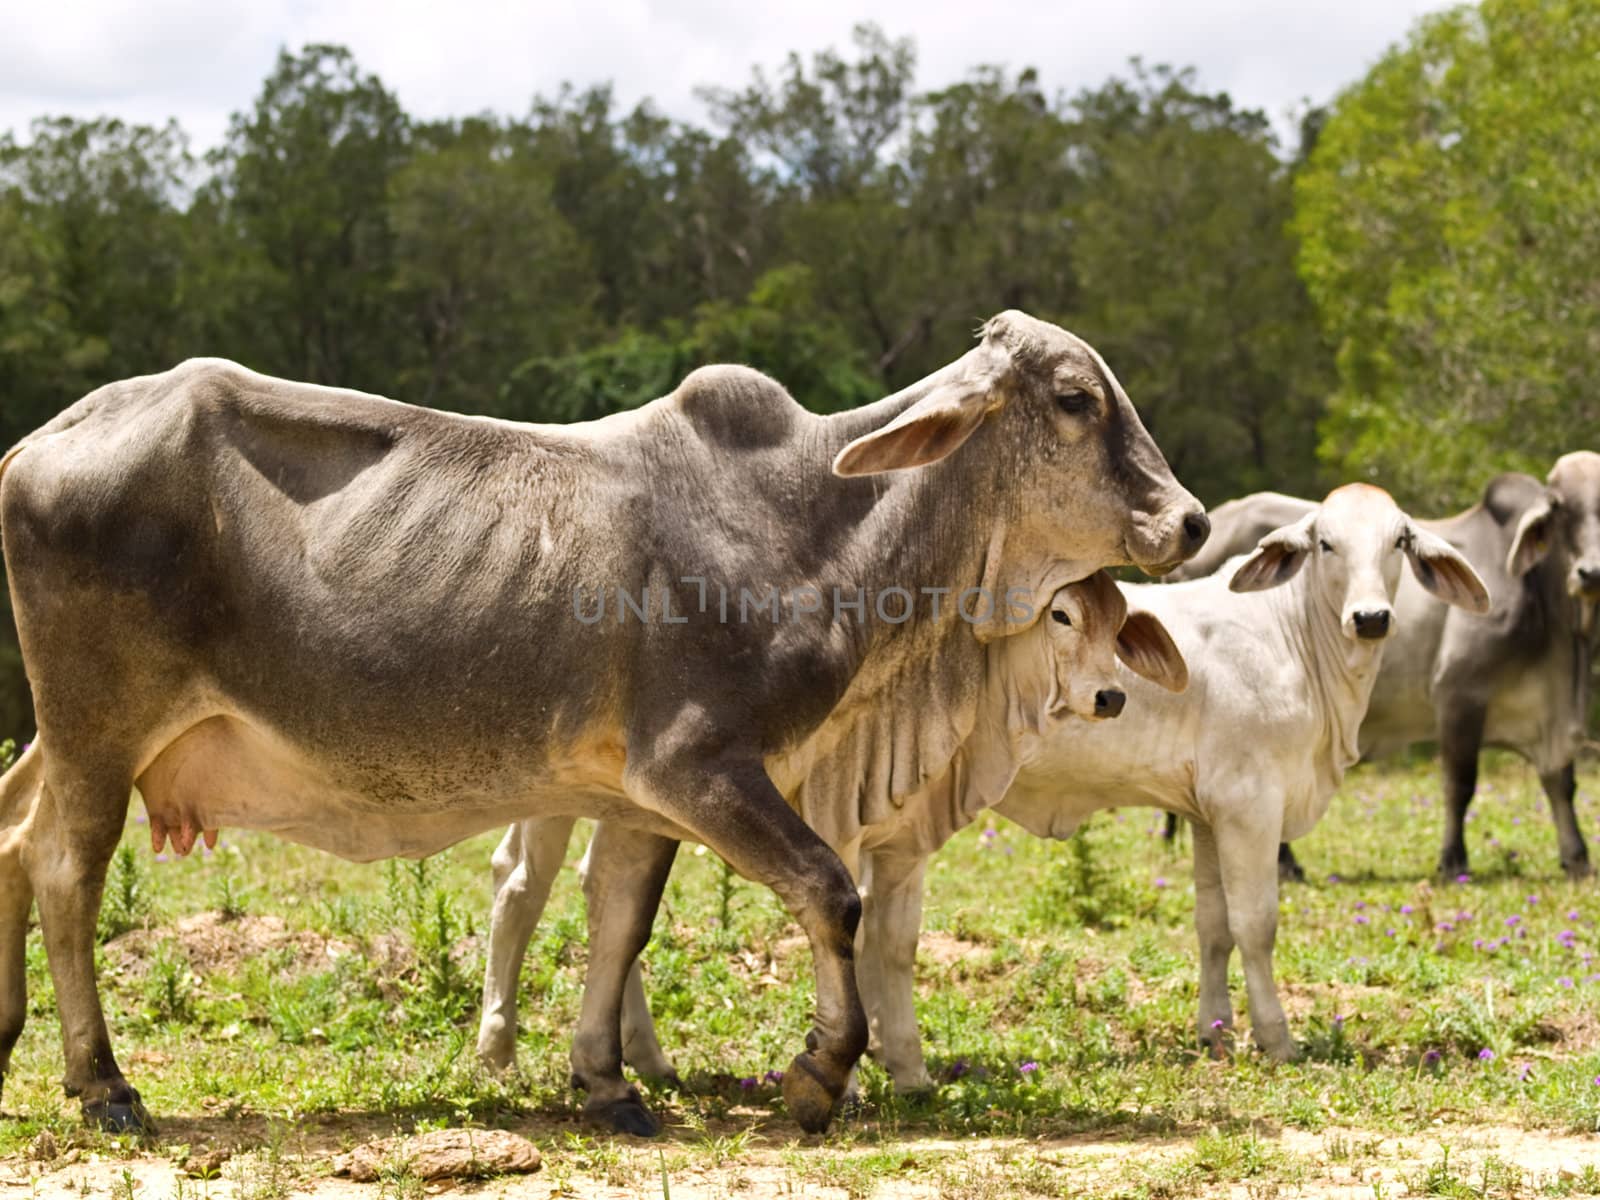 Cattle family zebu cow calf heifer bull live animals by sherj